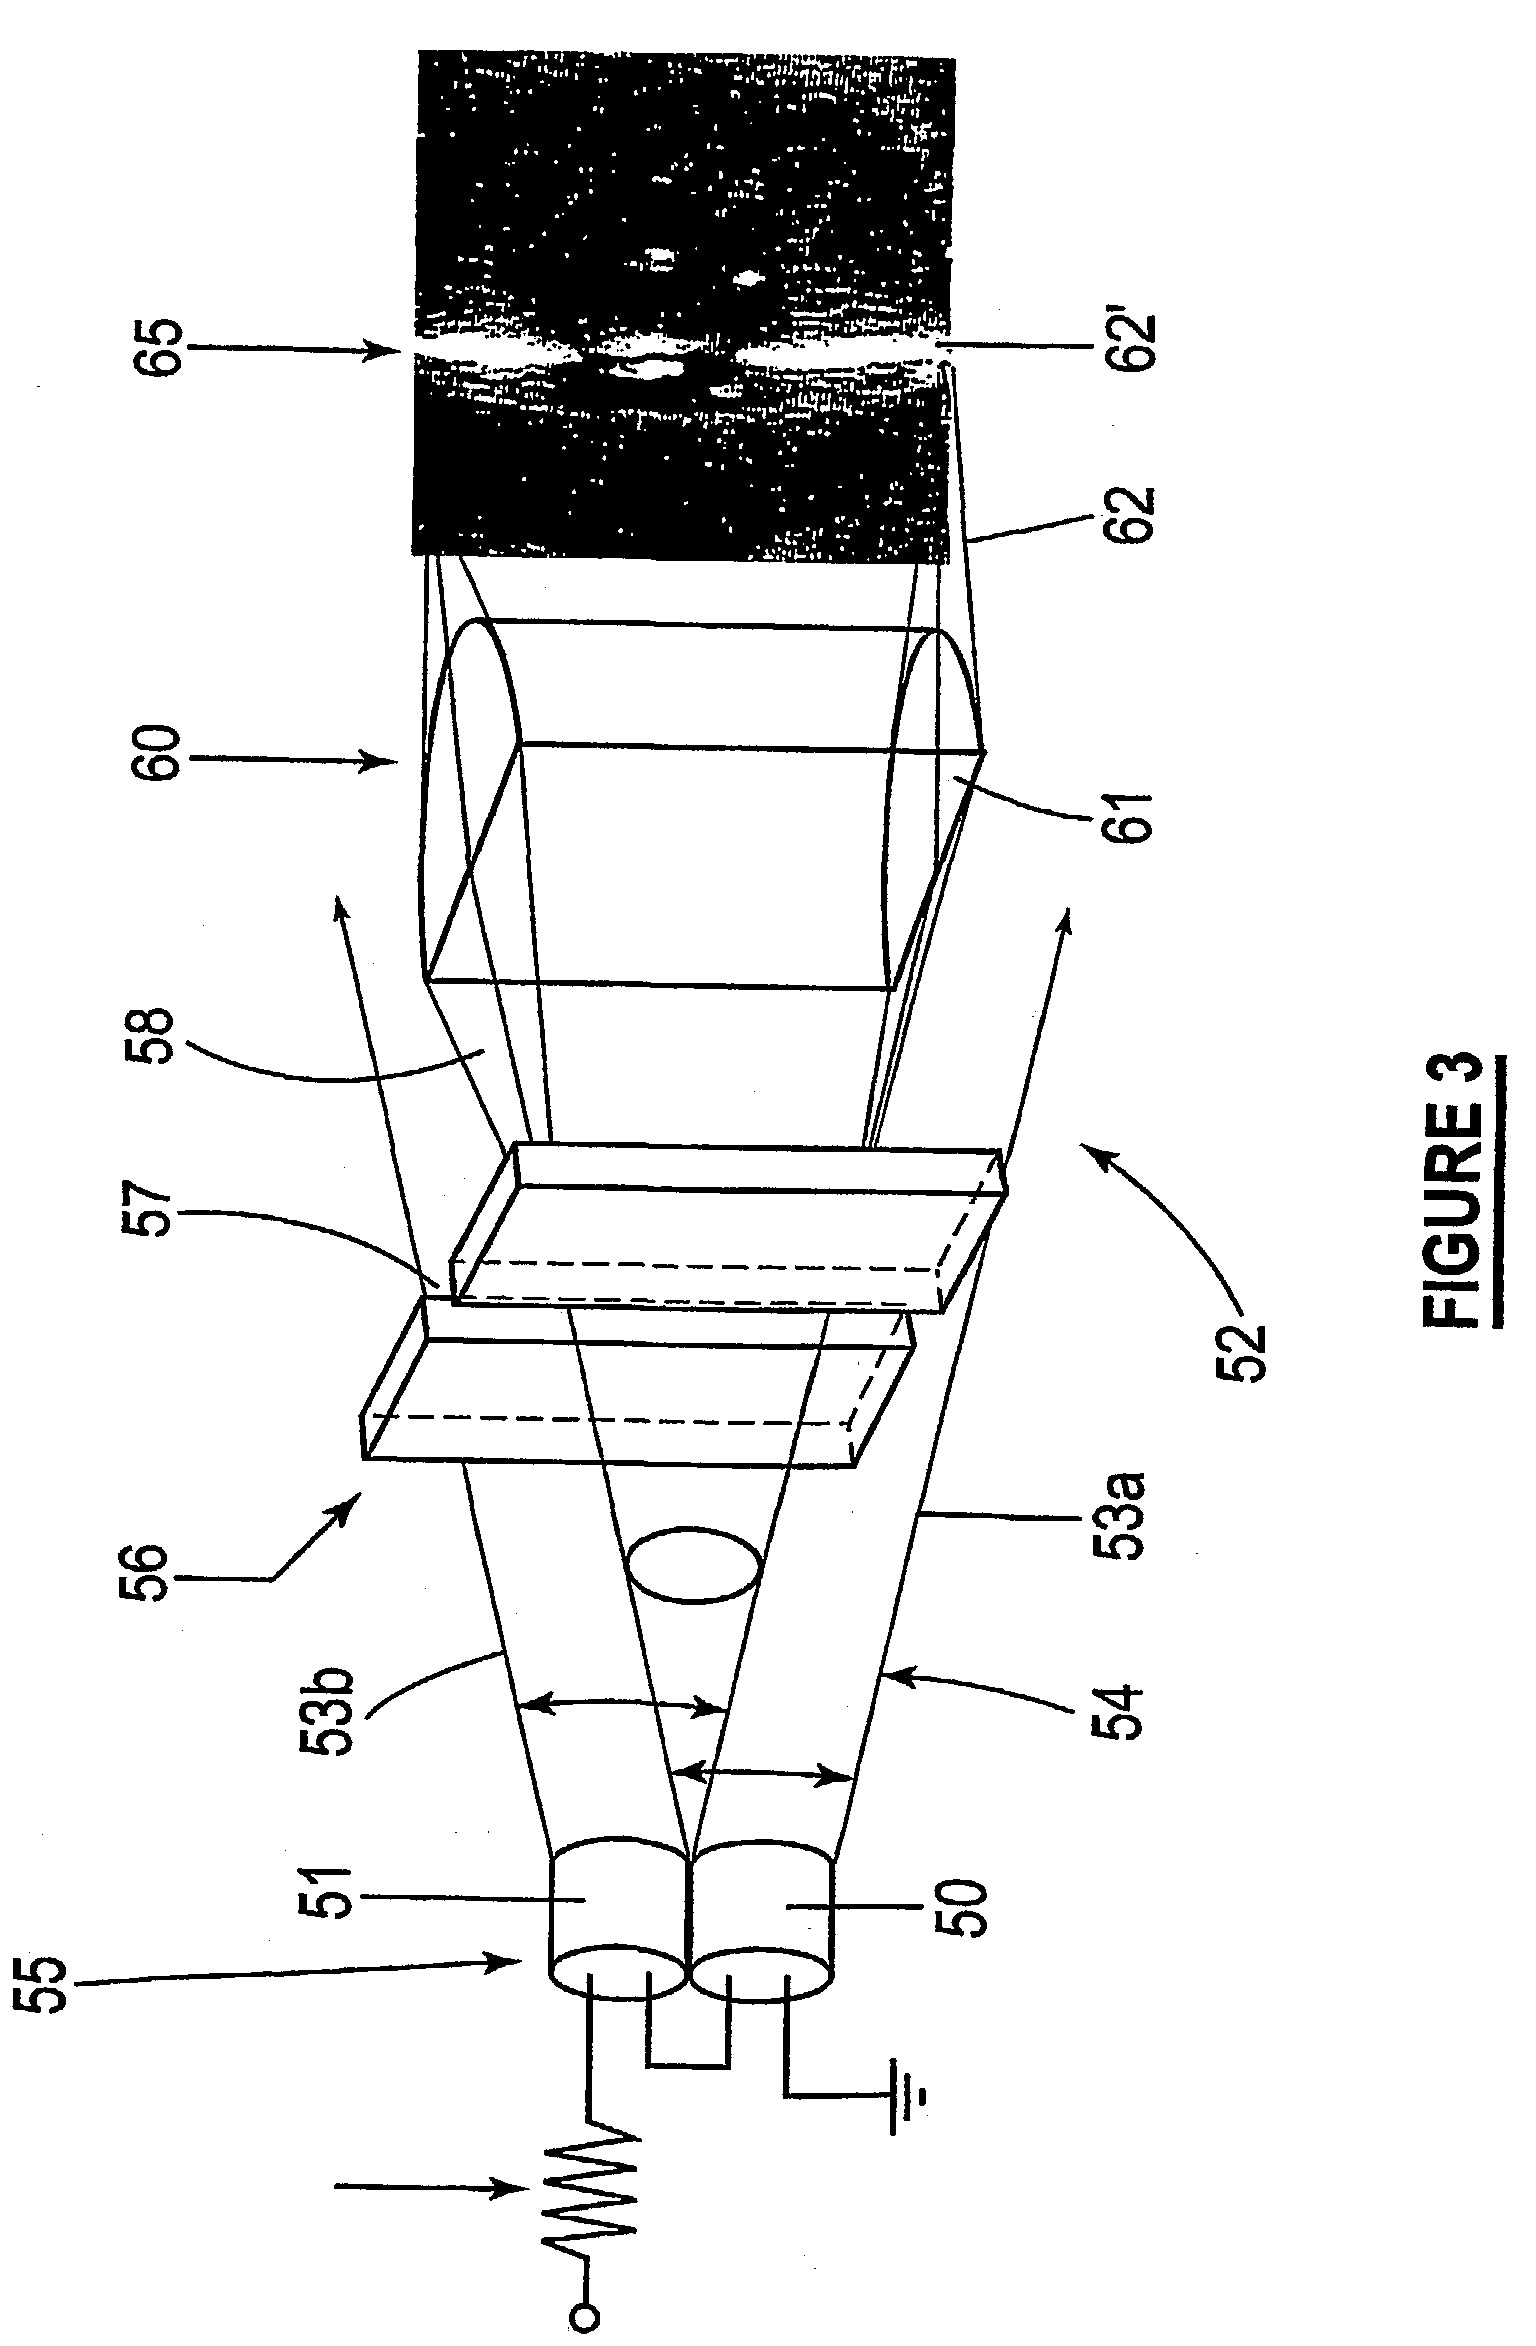 Portable slit lamp